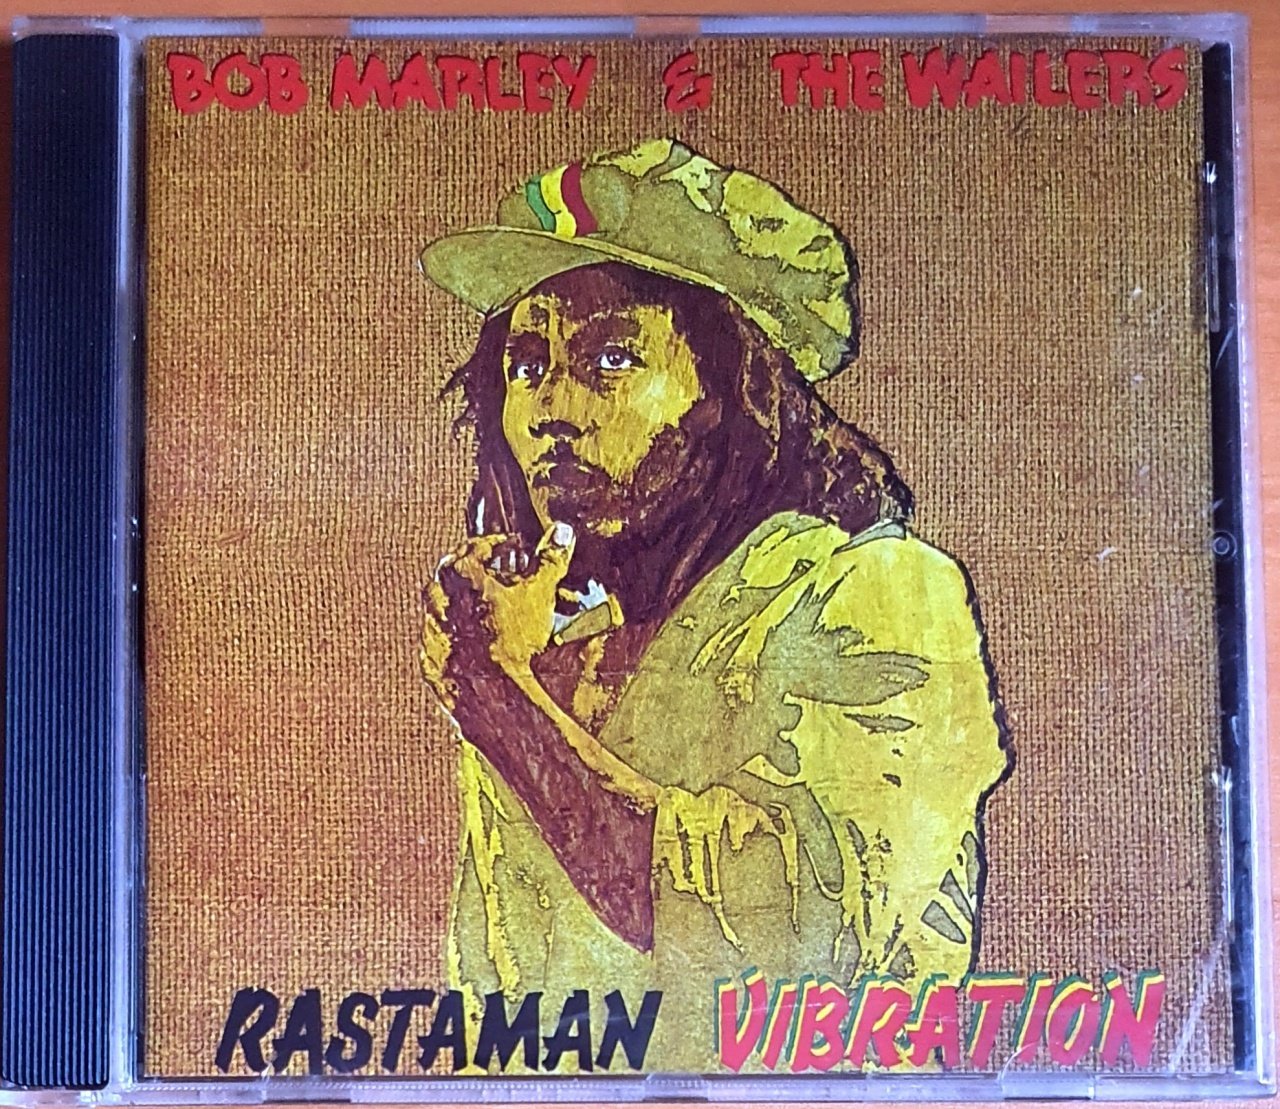 BOB MARLEY & THE WAILERS - RASTAMAN VIBRATION (1976) - CD 2.EL